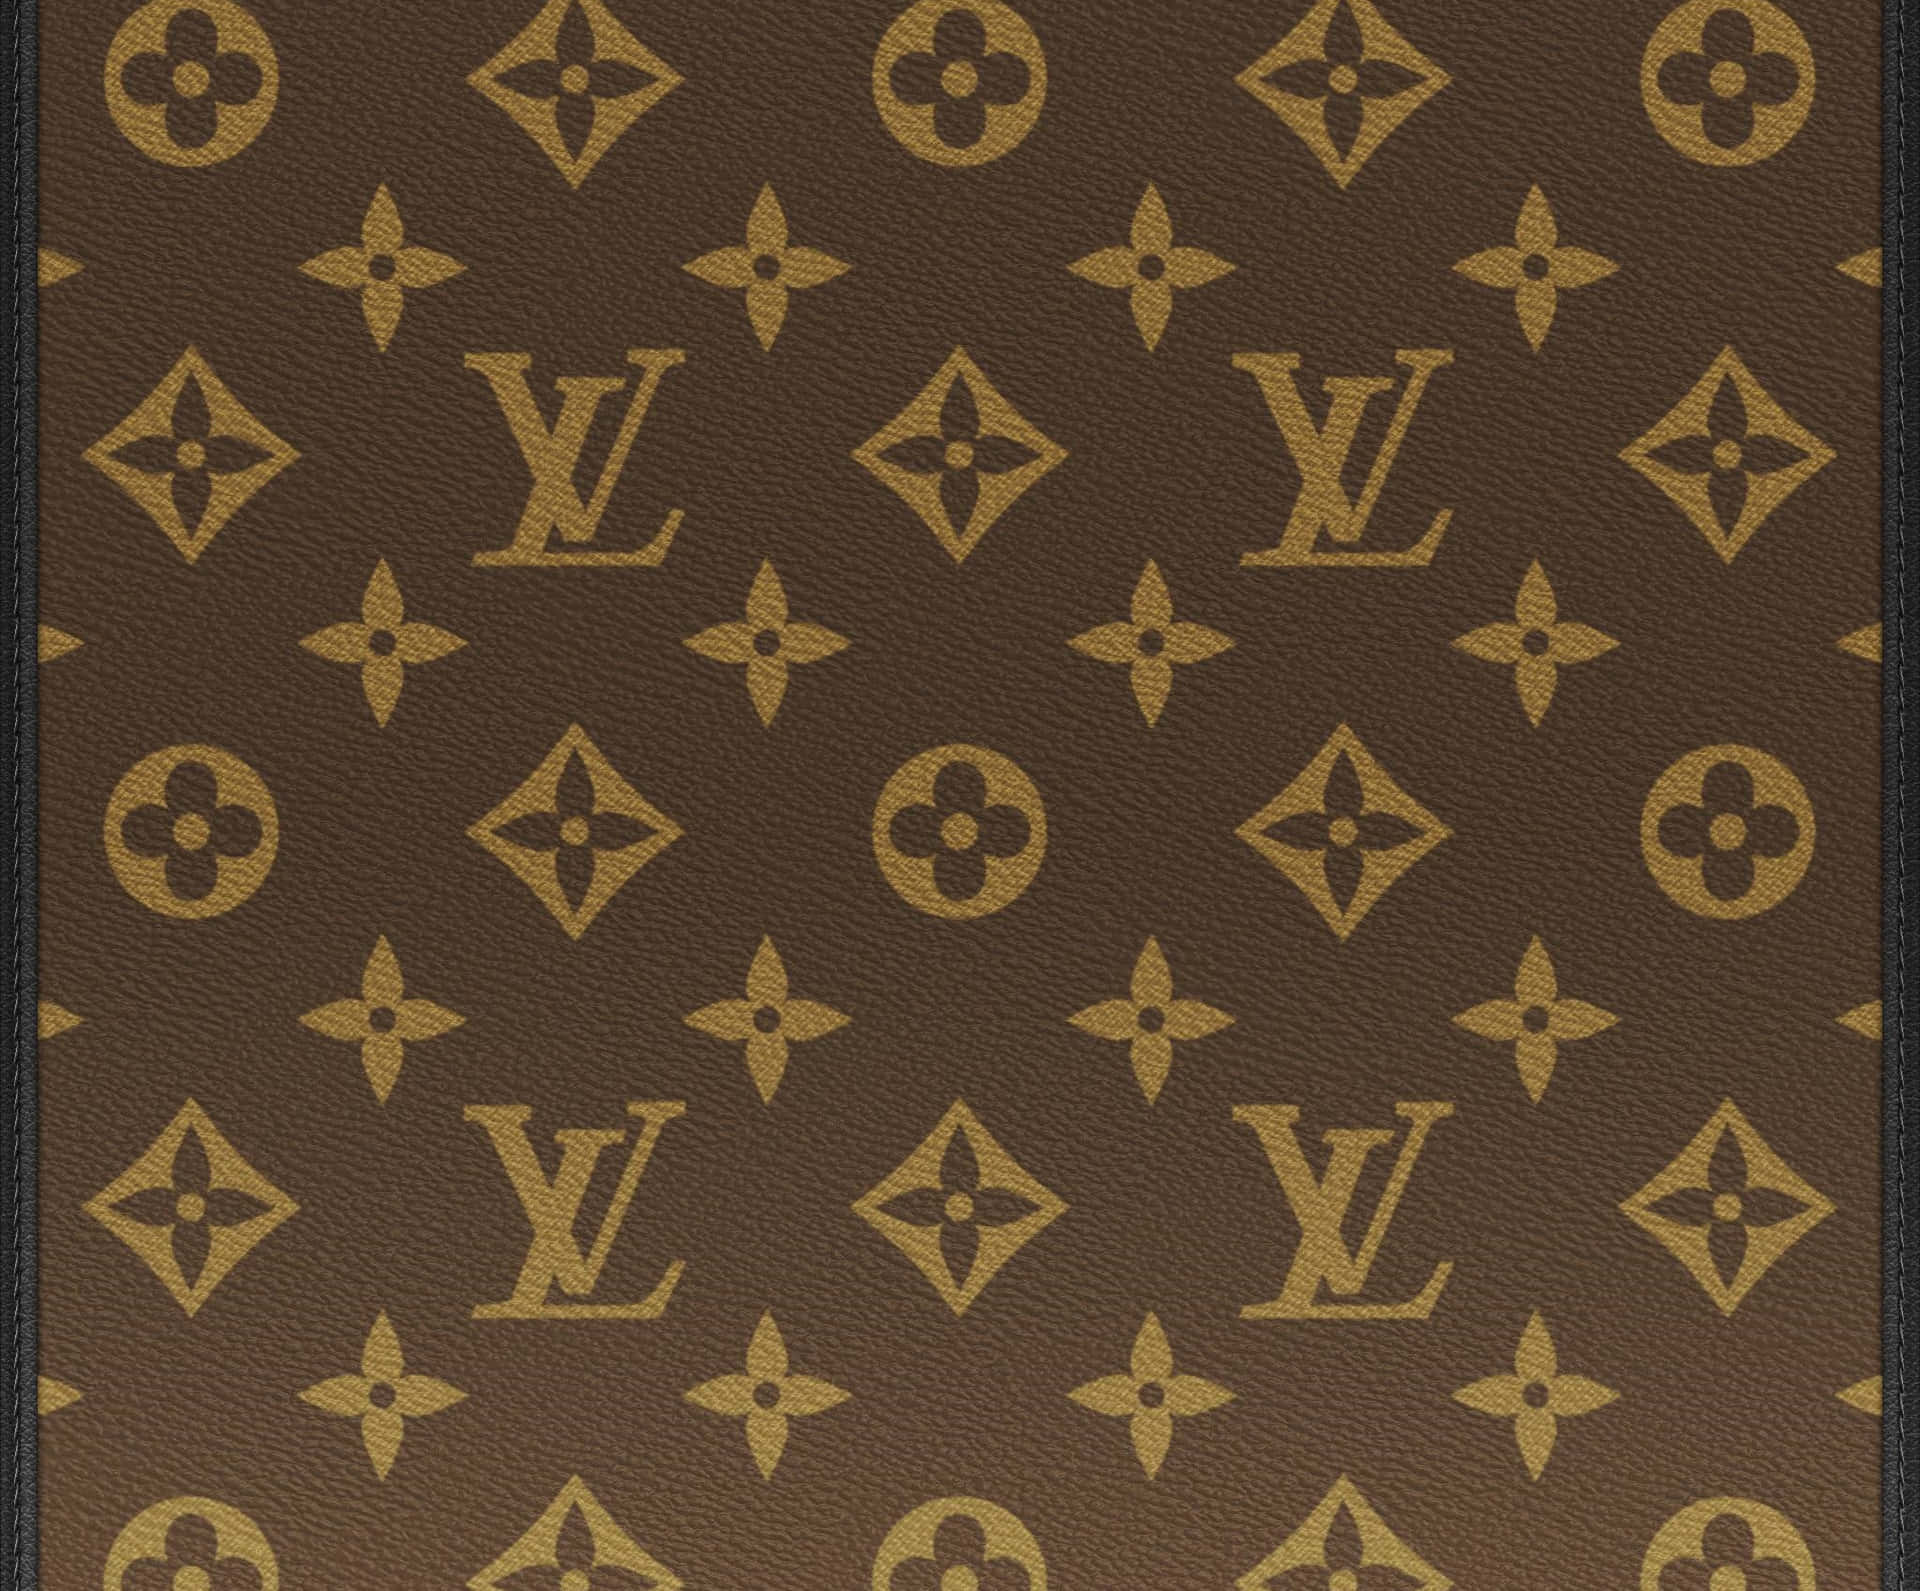 Download Iconic Louis Vuitton Logo Desktop Design Wallpaper